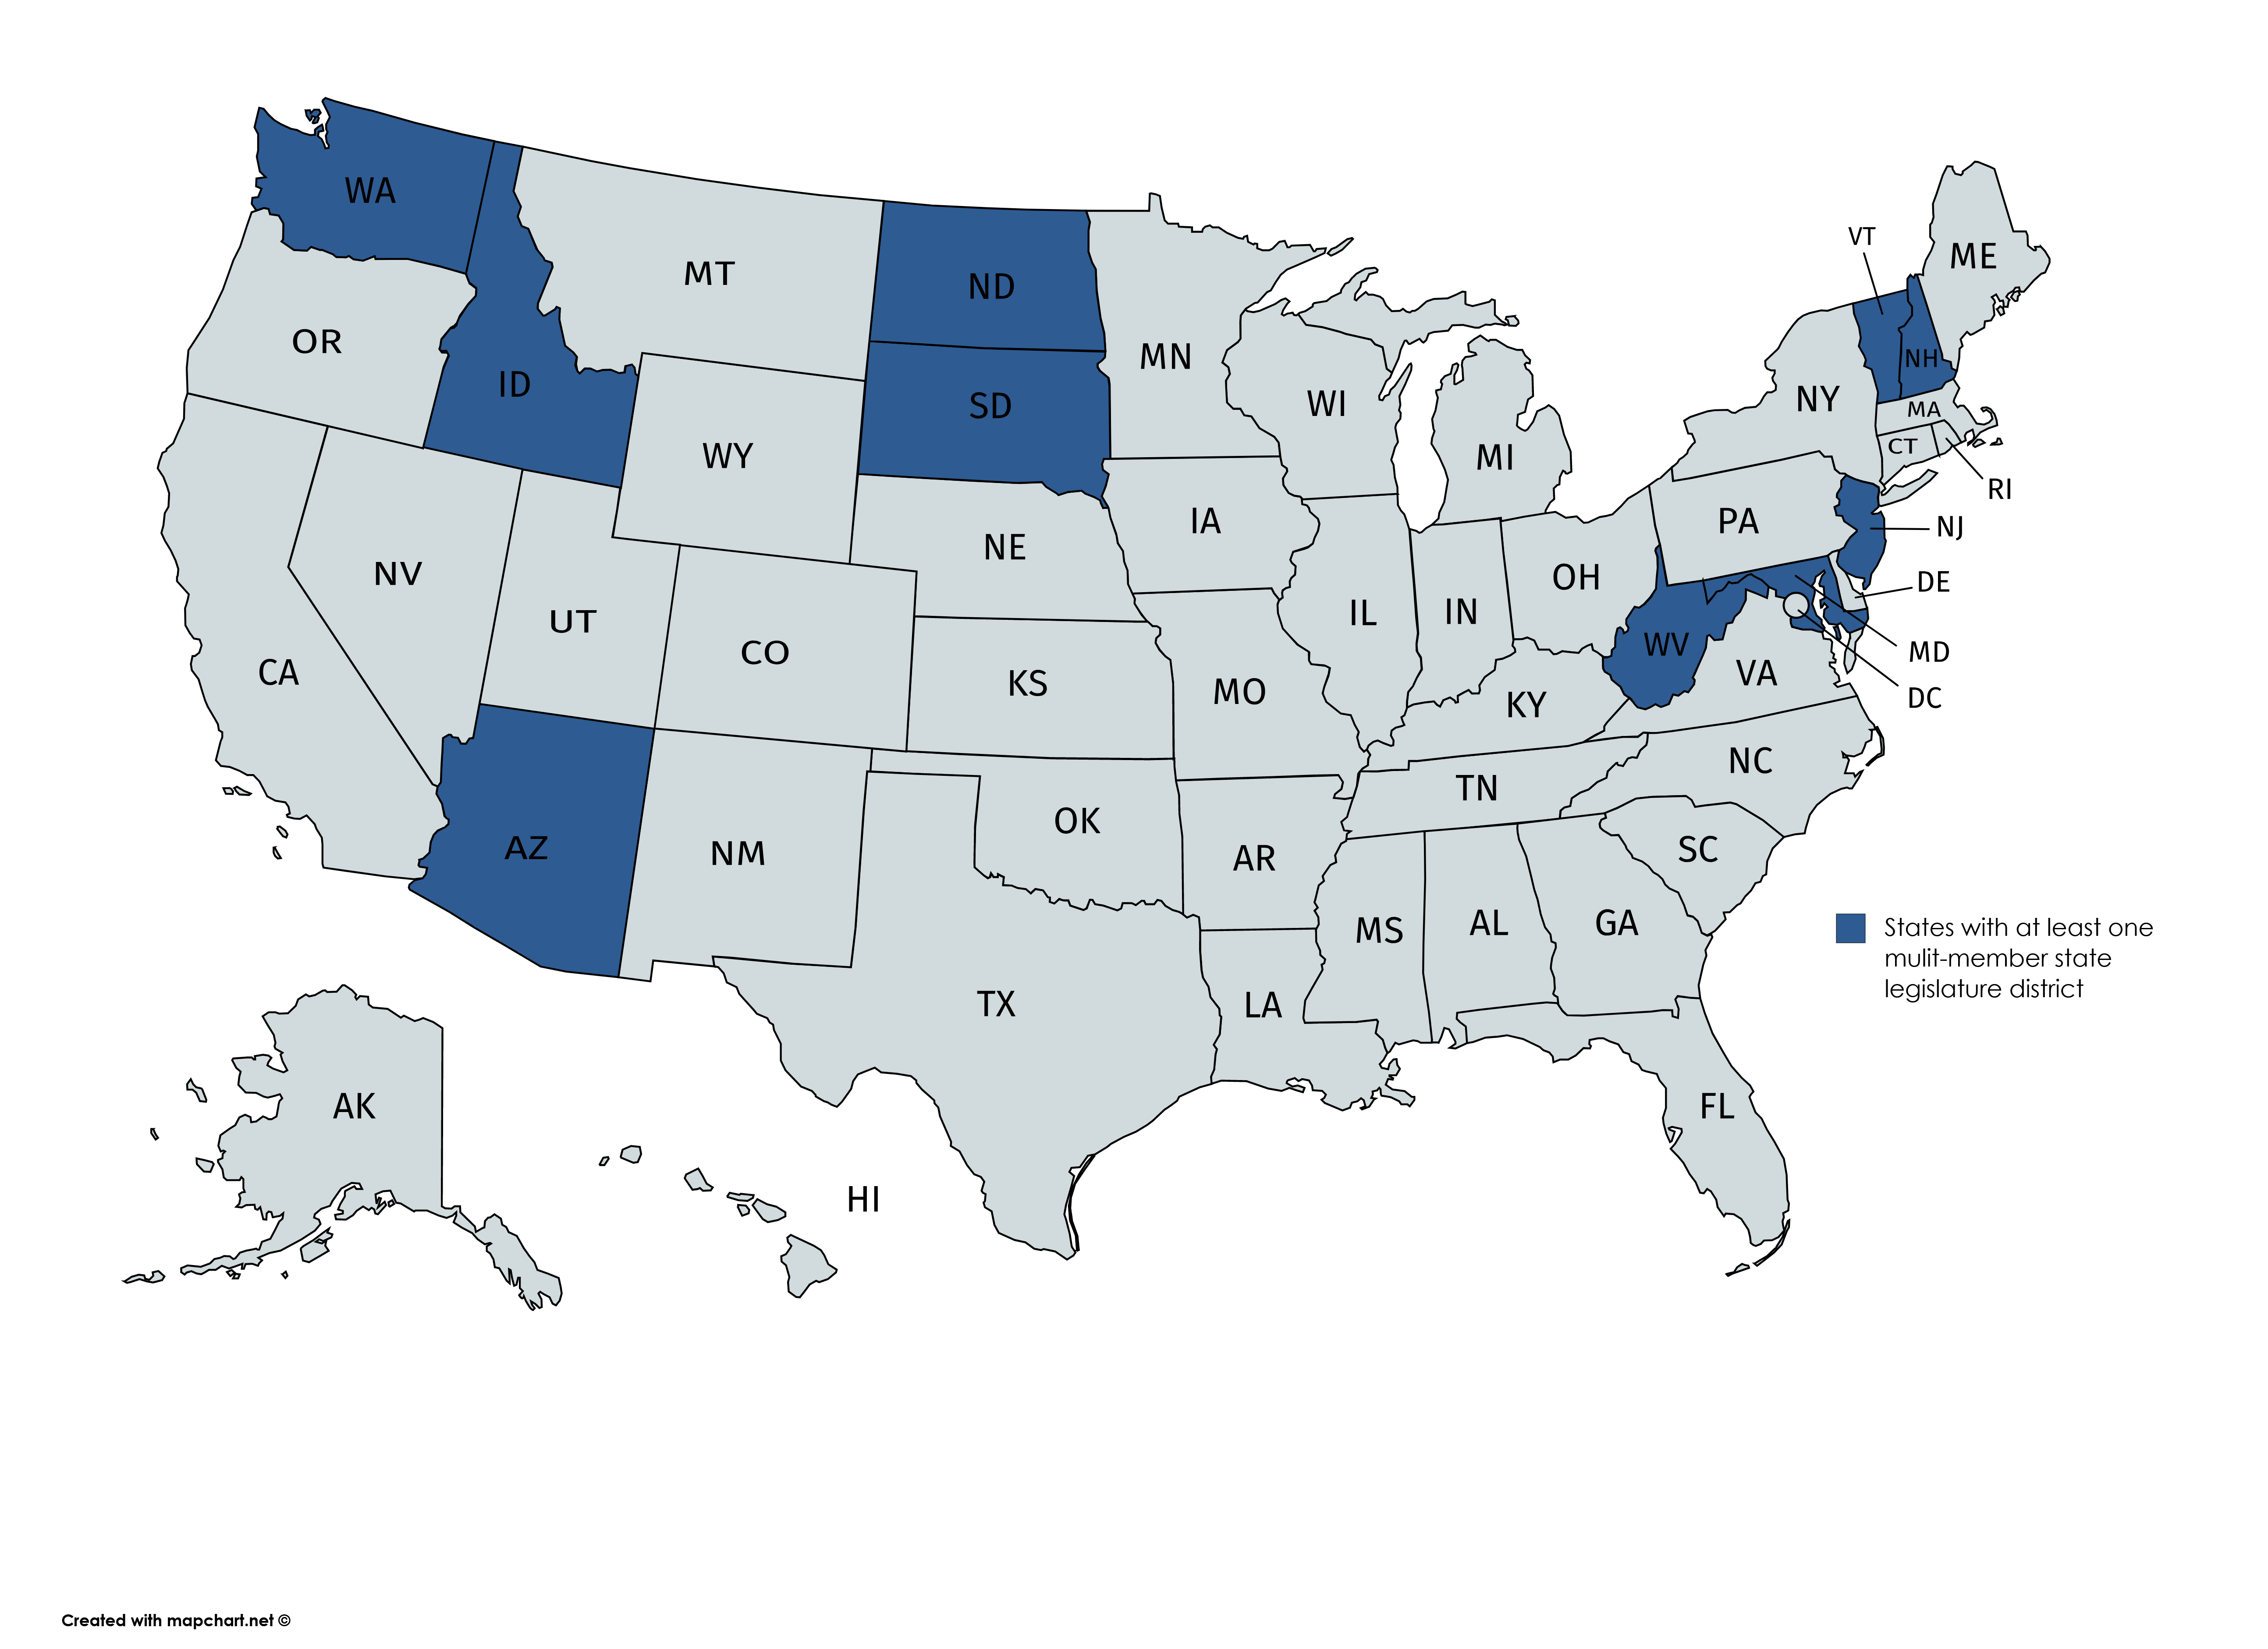 State legislative chambers using multi-member districts